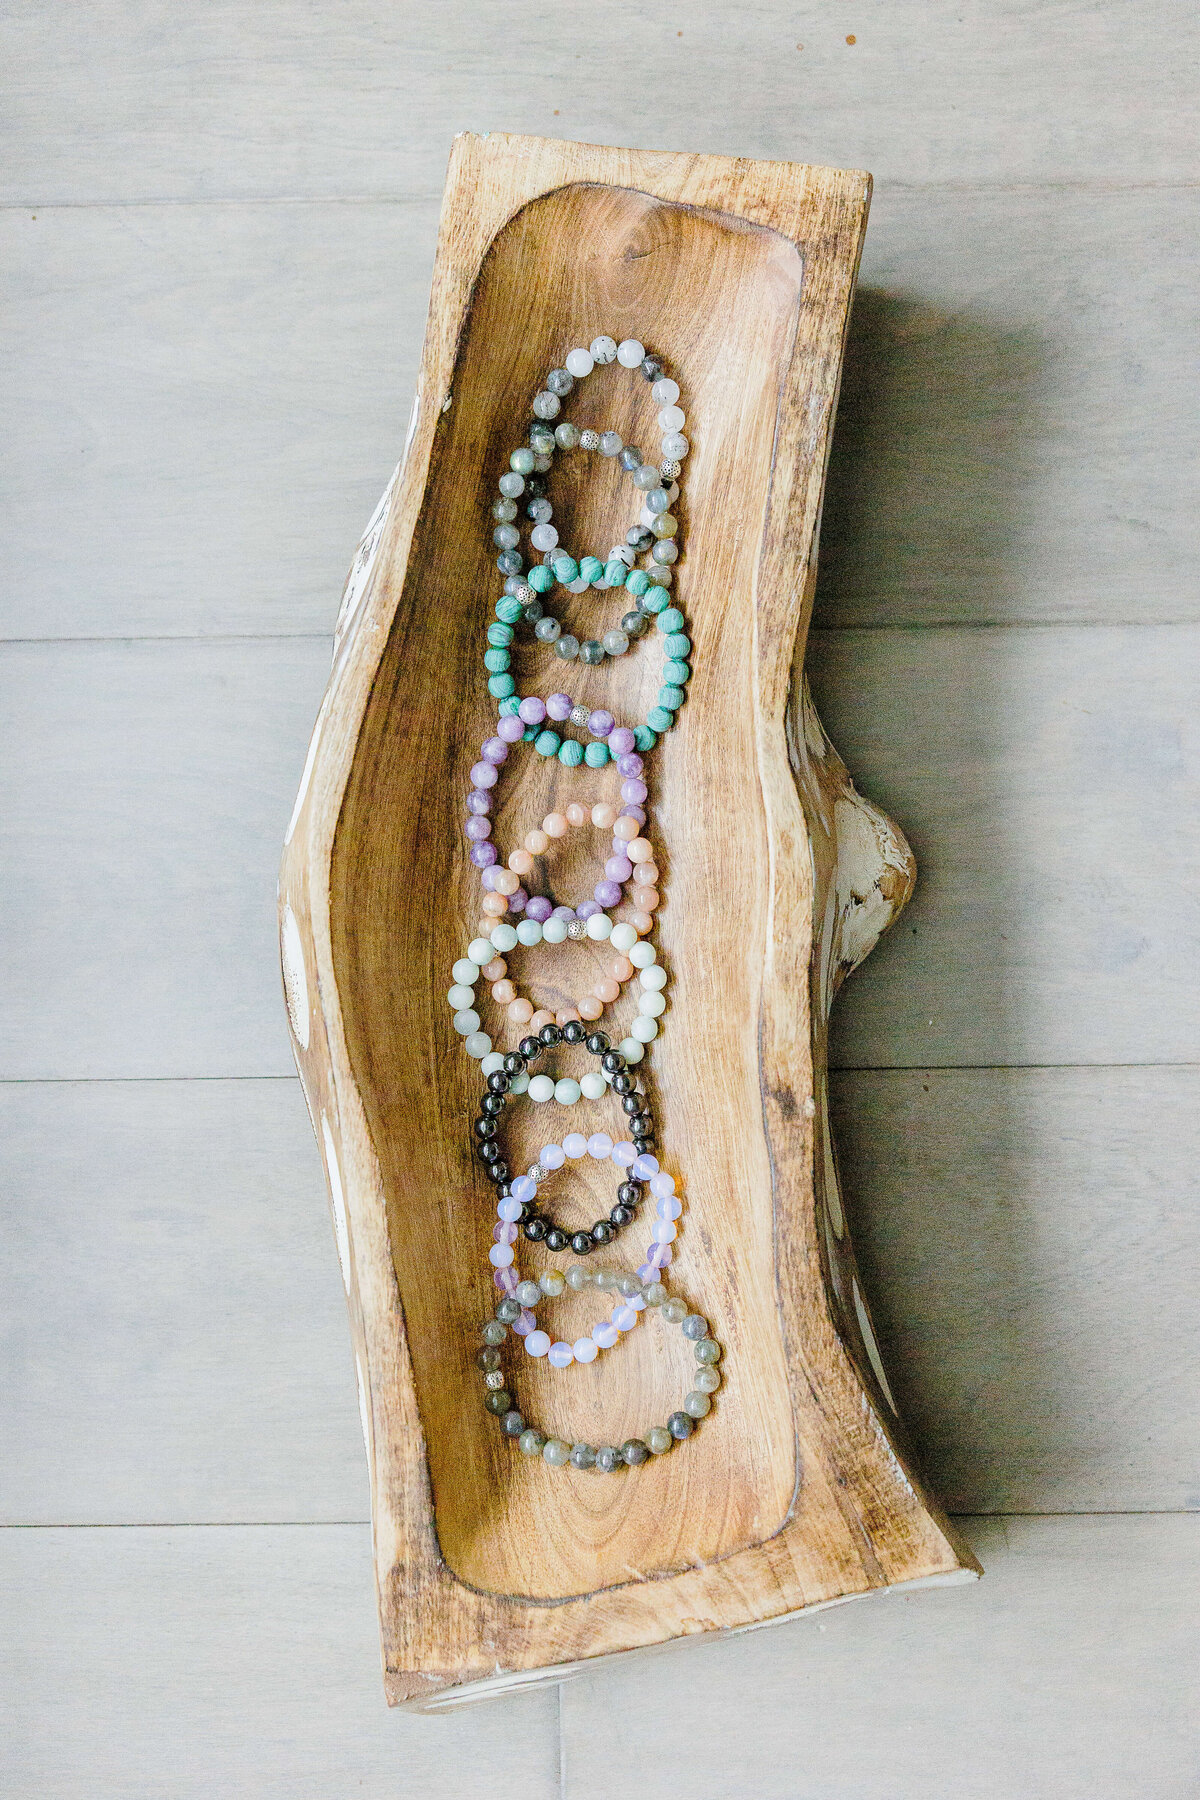 Bracelets in wooden display